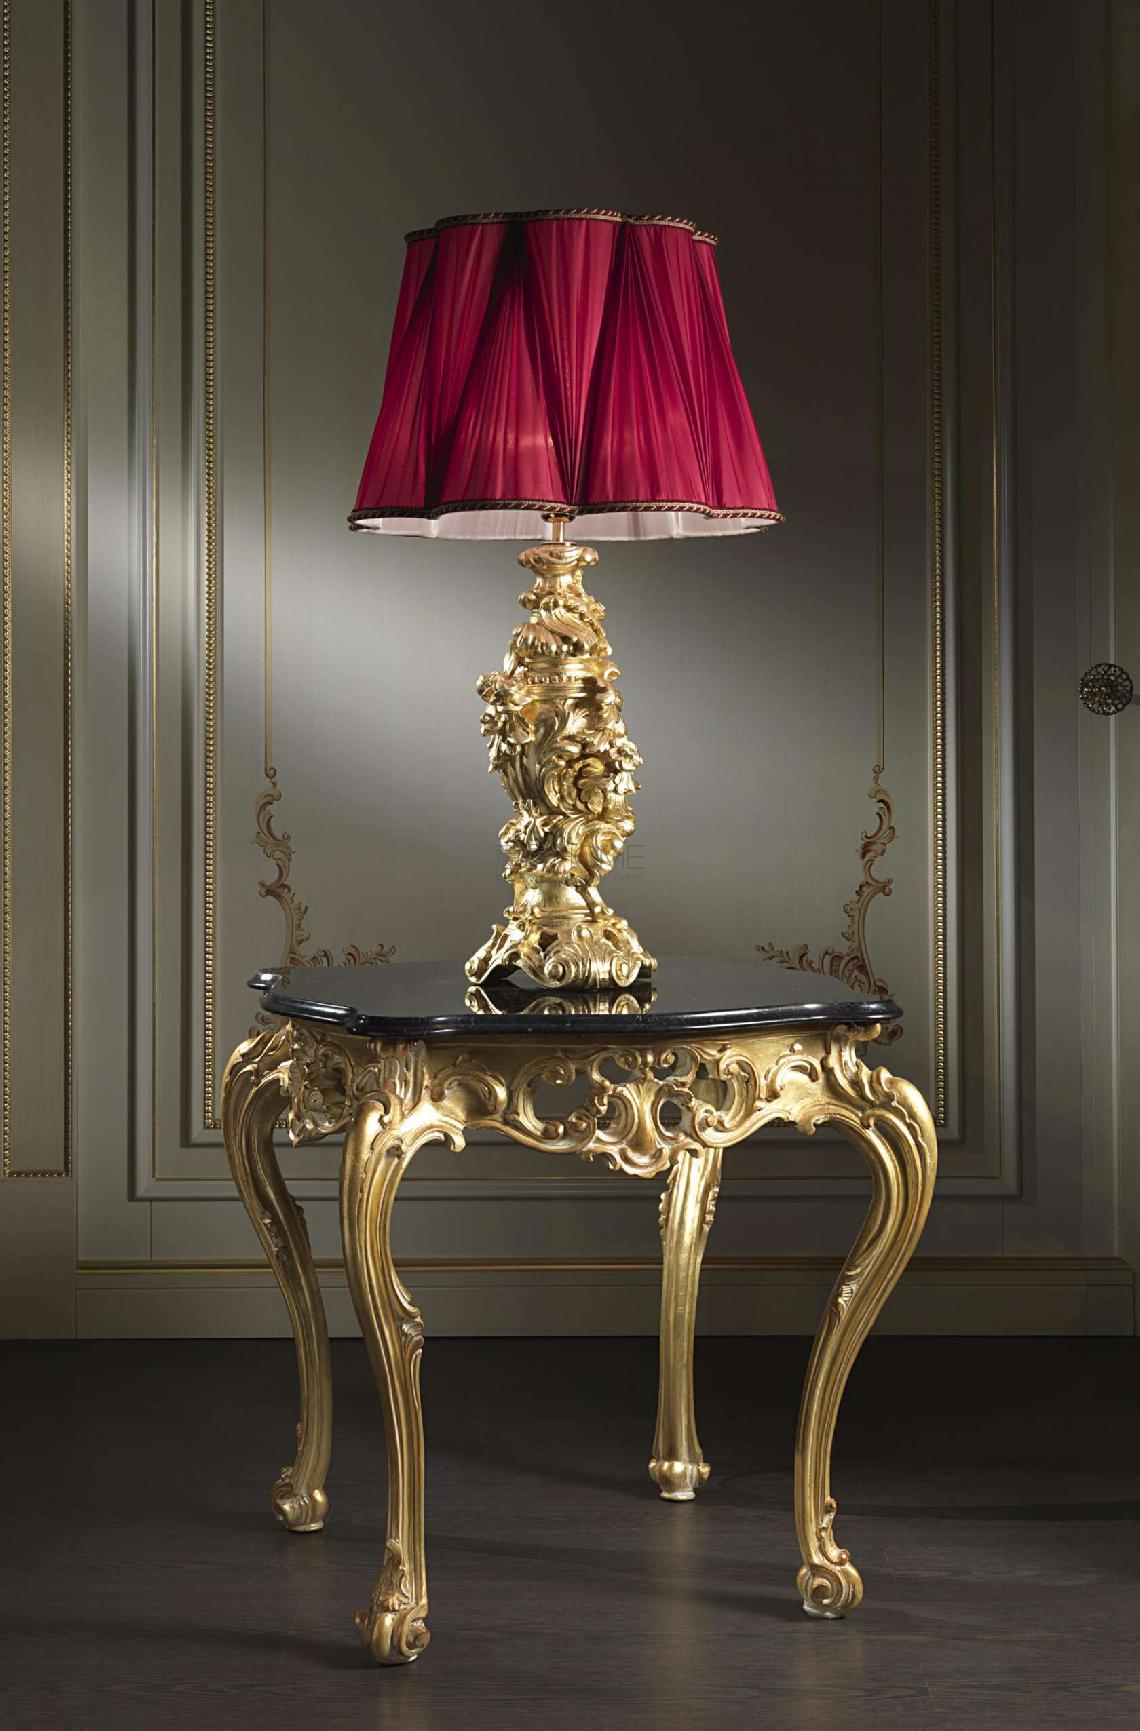 VIMERCATI Baroque classic lamps 台灯1